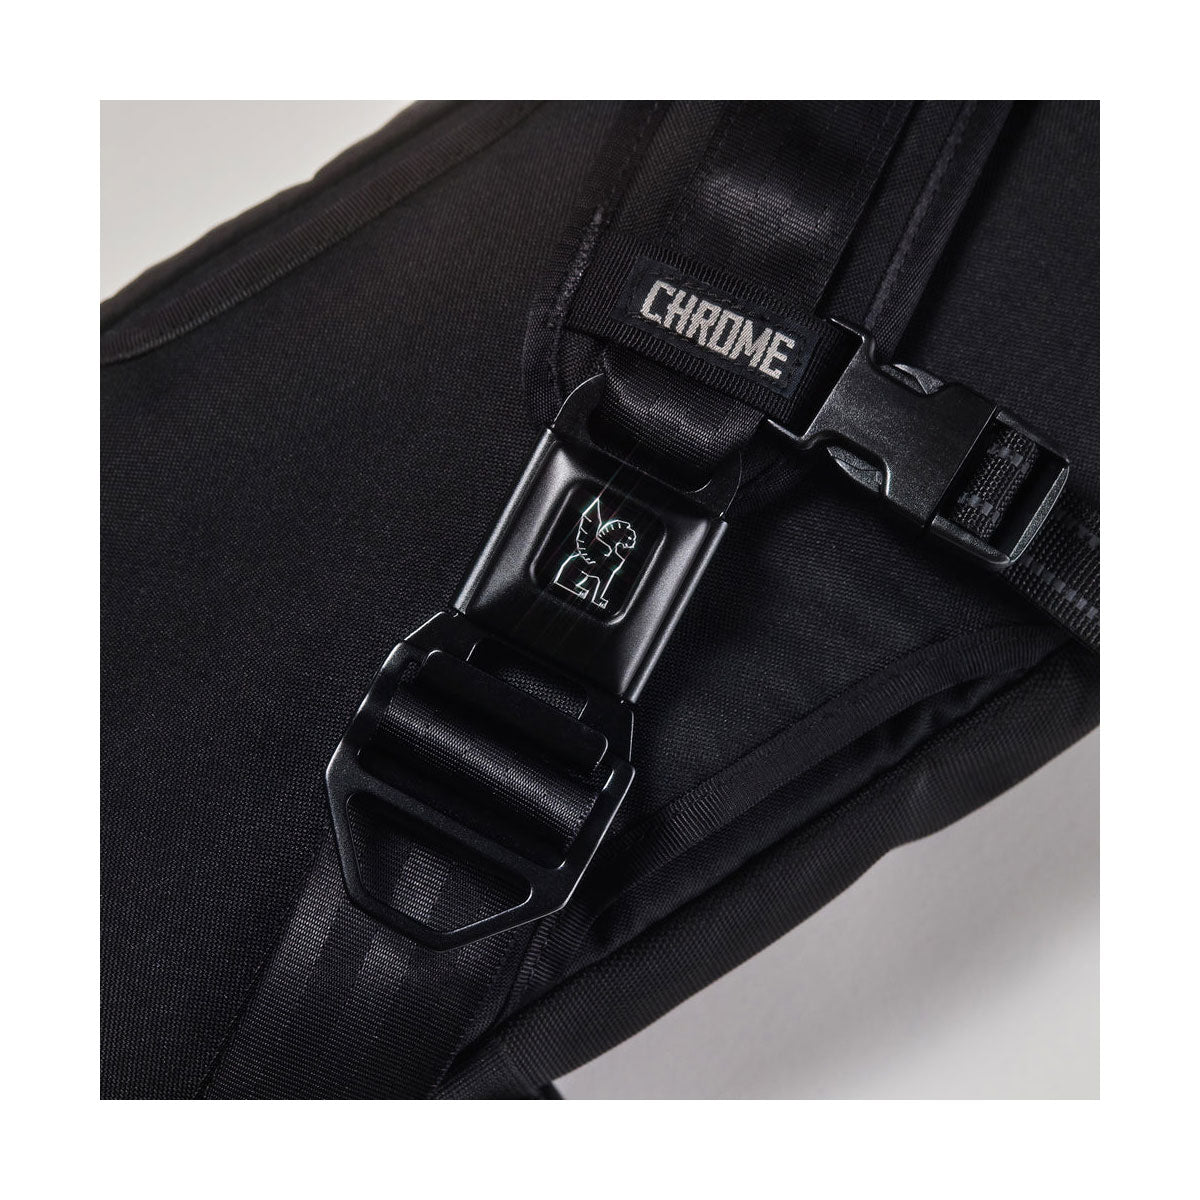 Chrome Industries: Seatbelt Buckle LG (2") : Black